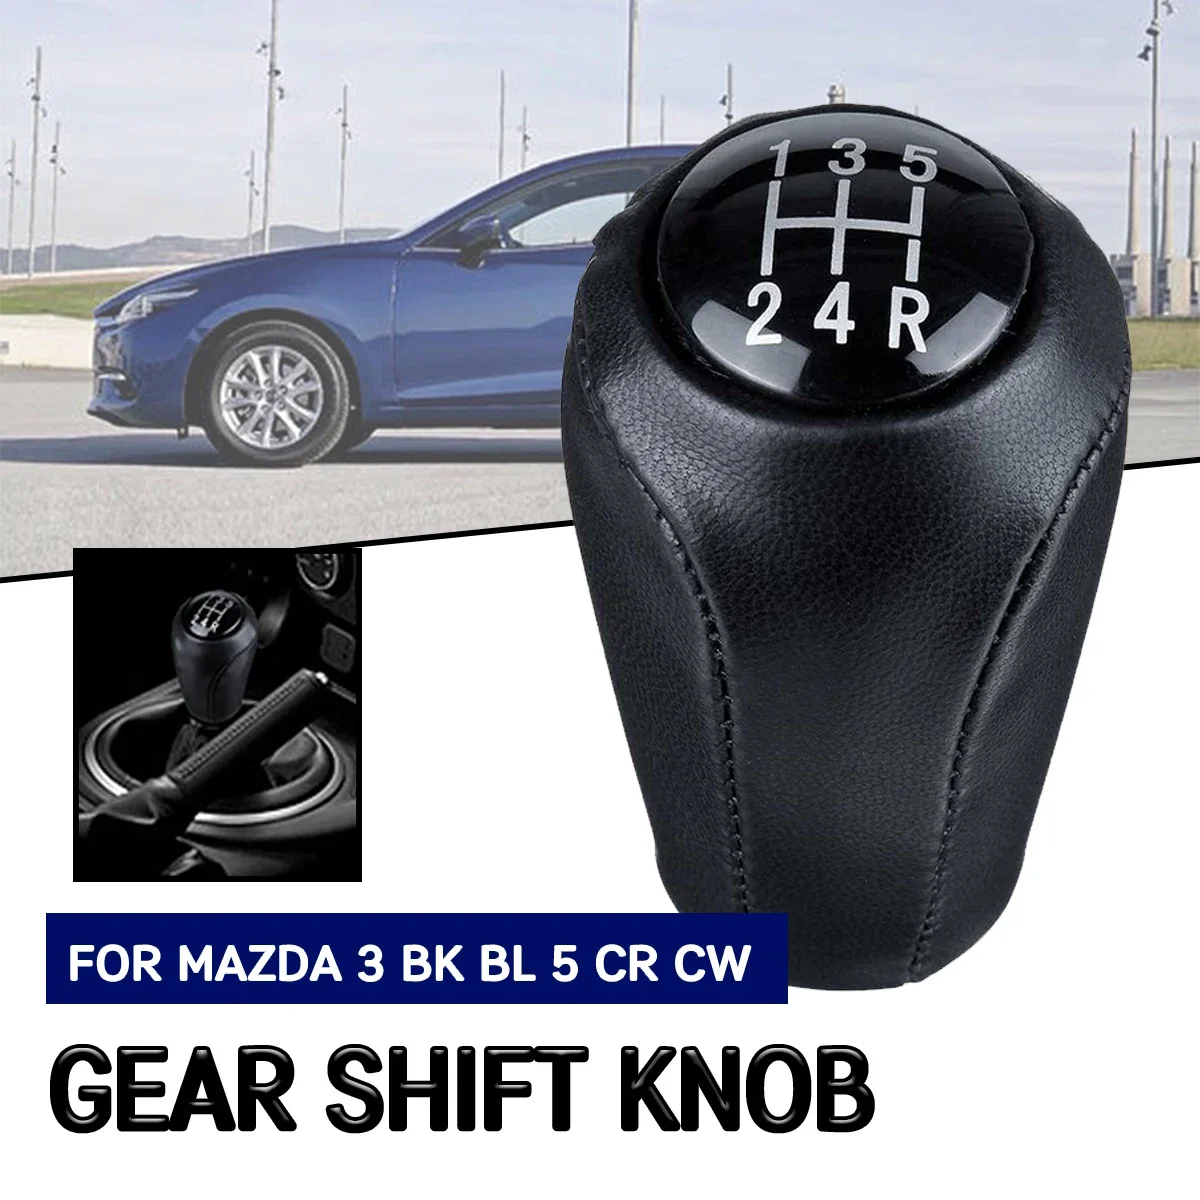 

Ручка переключения передач для Mazda, 5/6 скоростей, ручной рычаг переключения передач для Mazda 3 BK,5 CR,6 GH